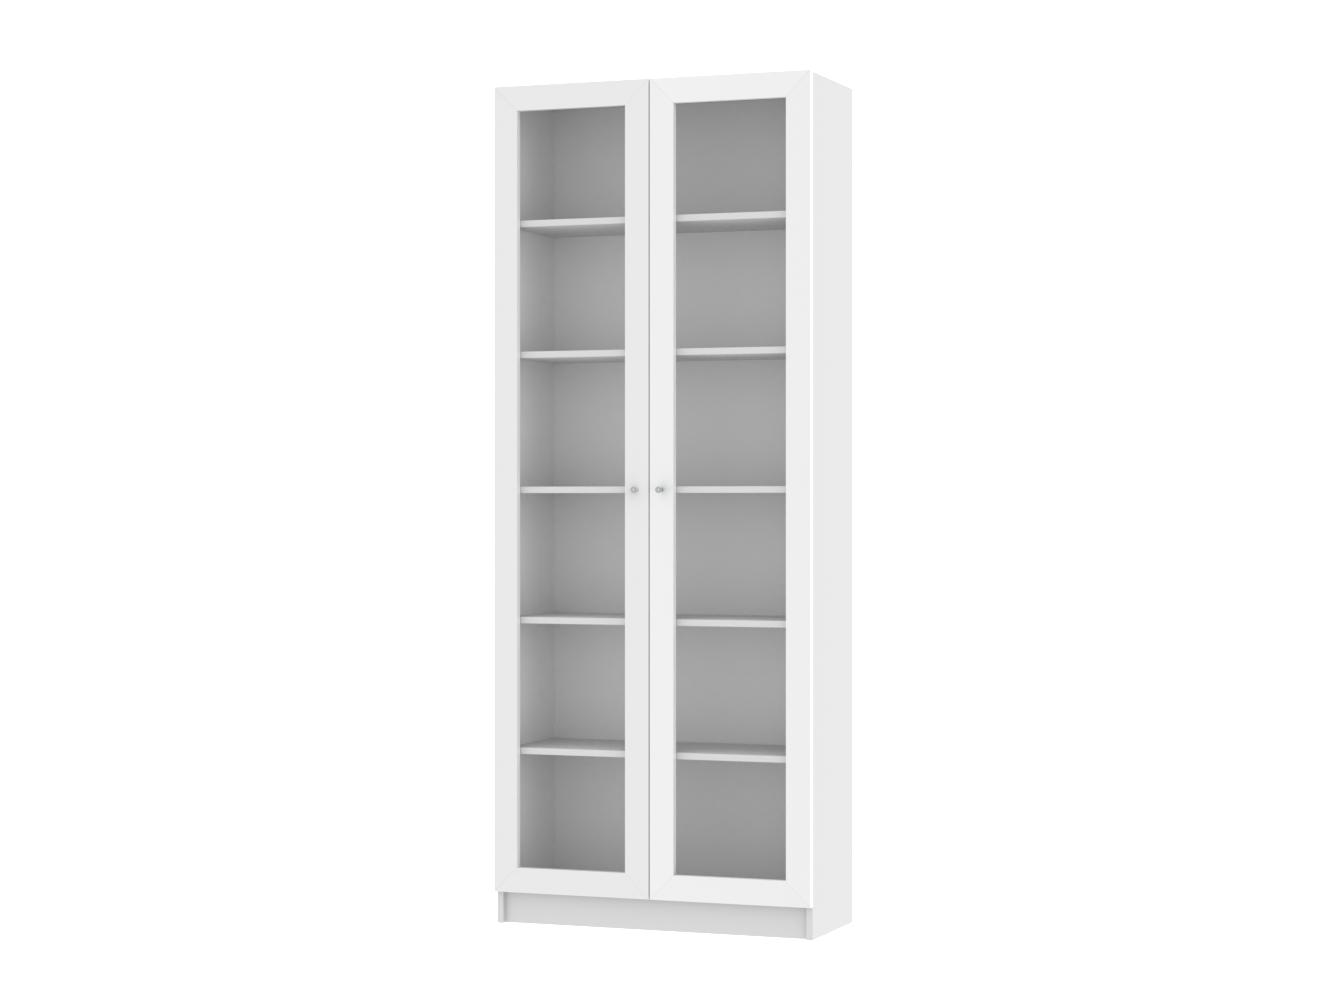 Книжный шкаф Билли 336 white ИКЕА (IKEA) изображение товара